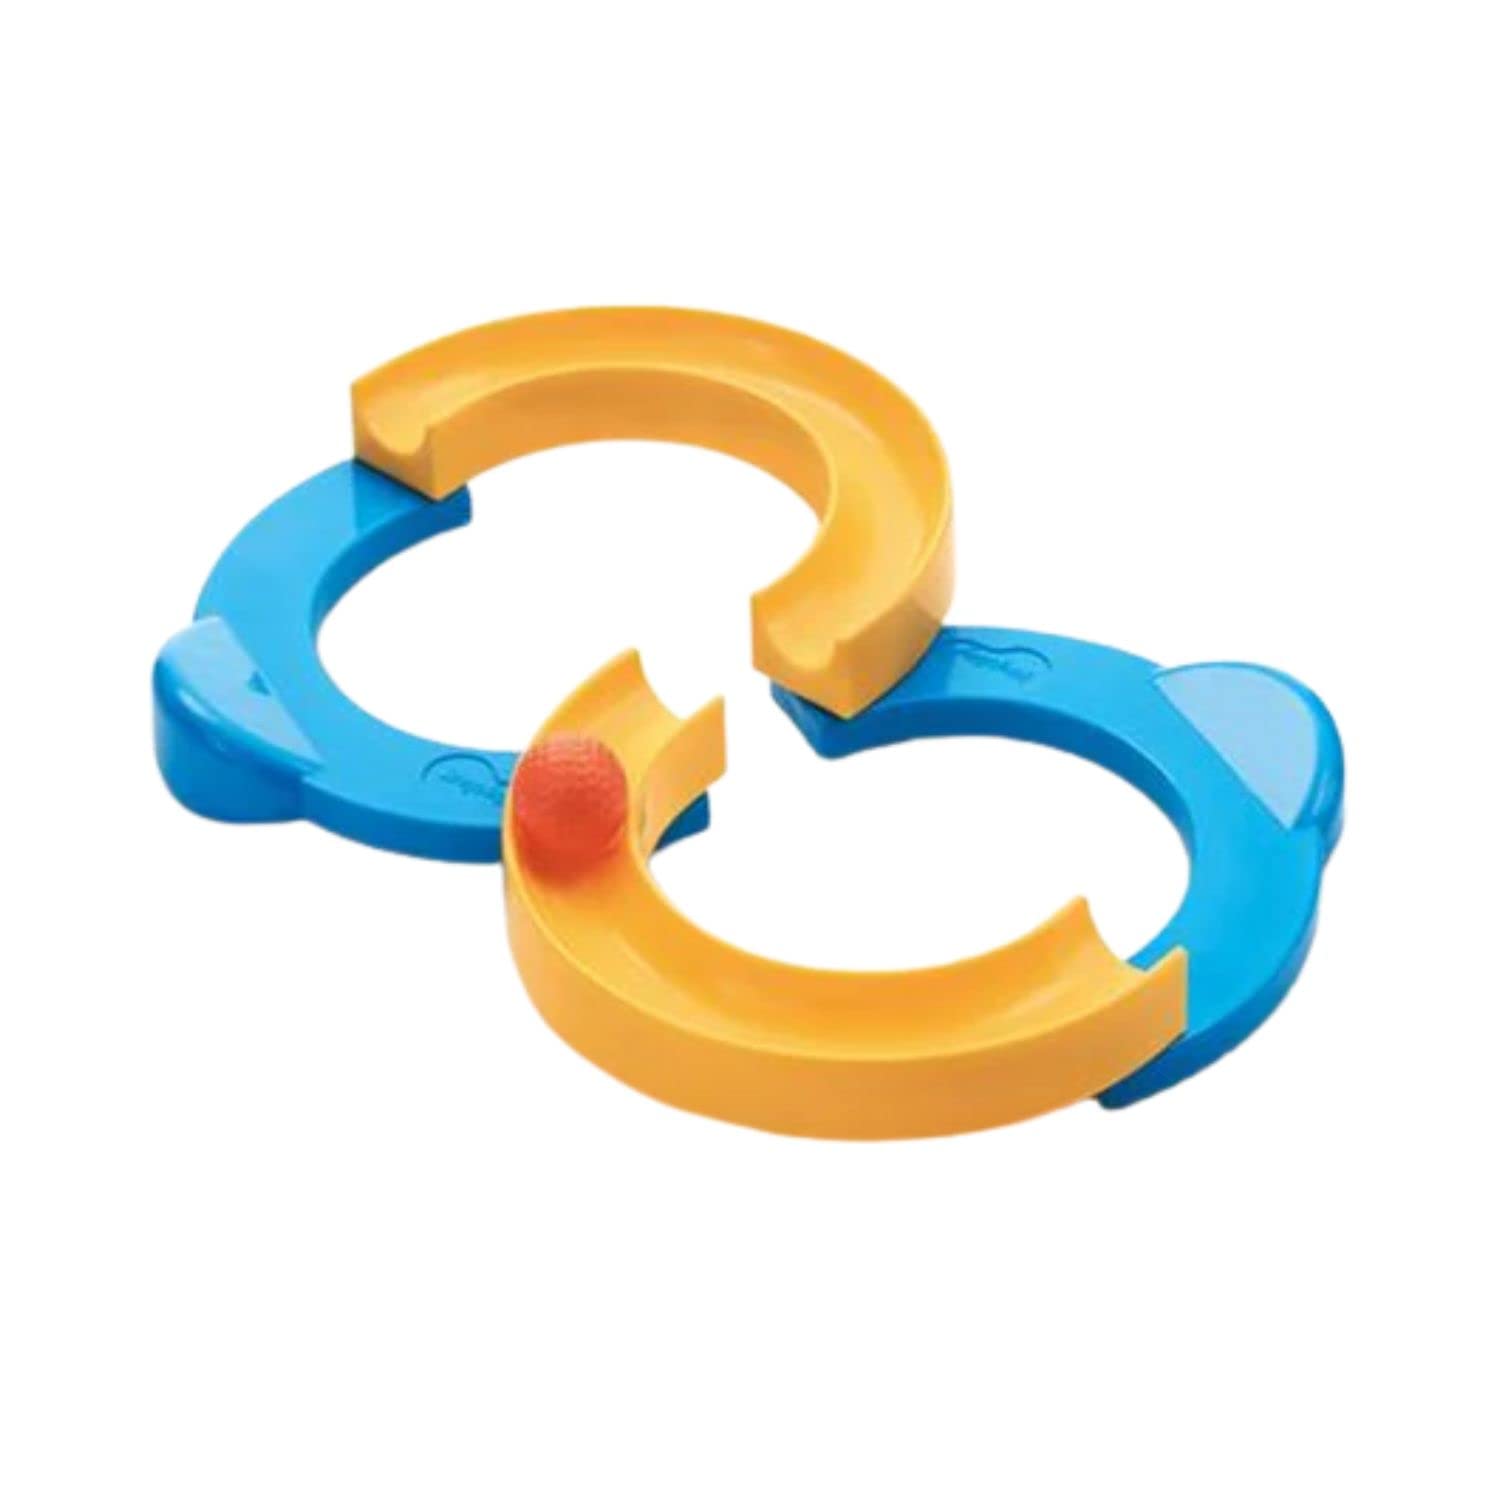 Kids Mandi Infinite Loop 8-Shaped Balancing Track Toy with Balls